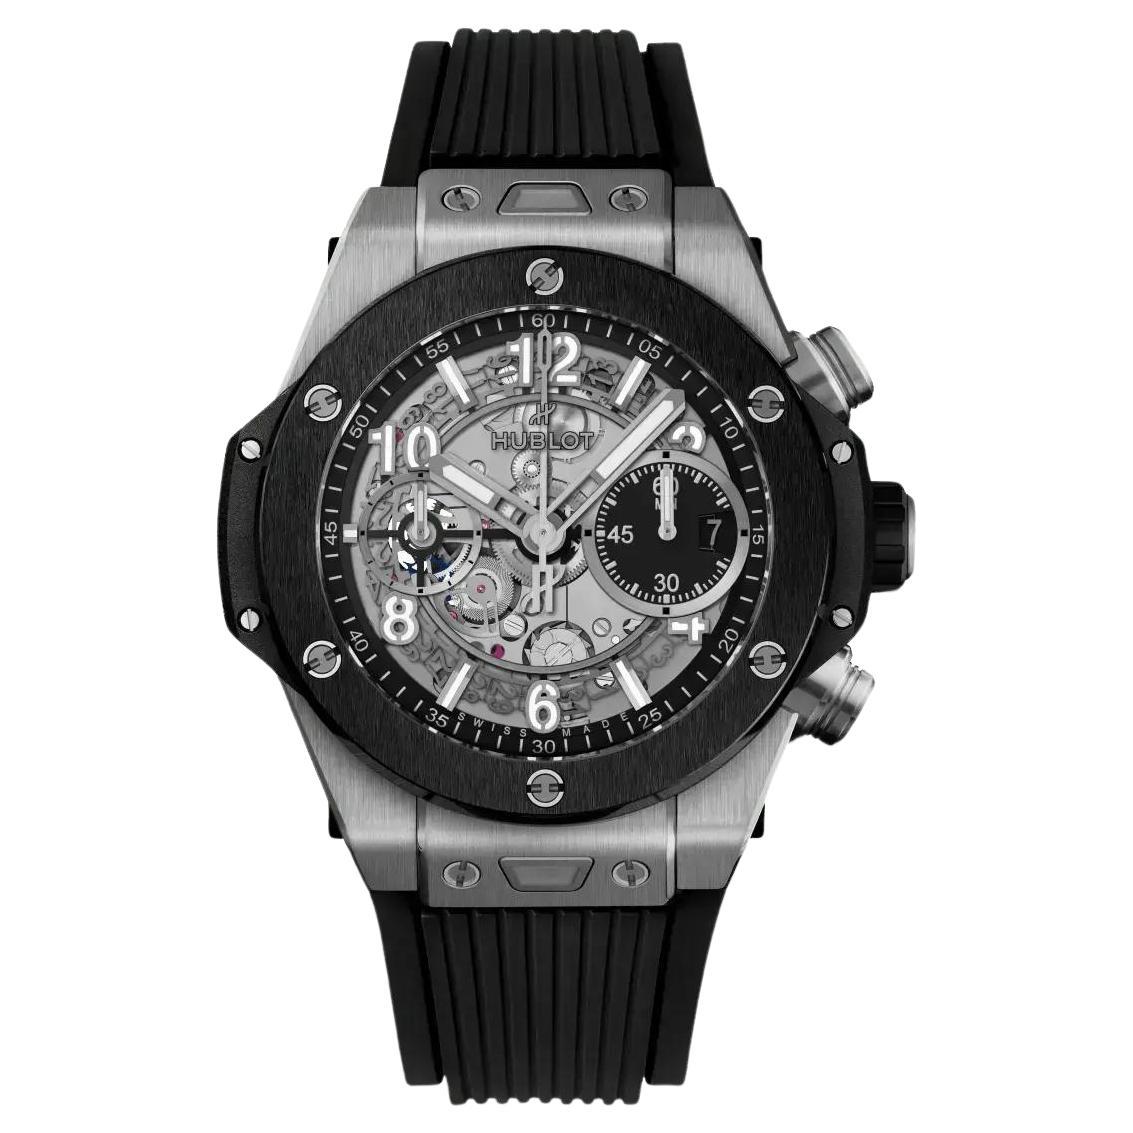 Hublot Big Bang UNICO Chronograph Titanium Skeleton Dial Watch 441.NM.1171.RX For Sale